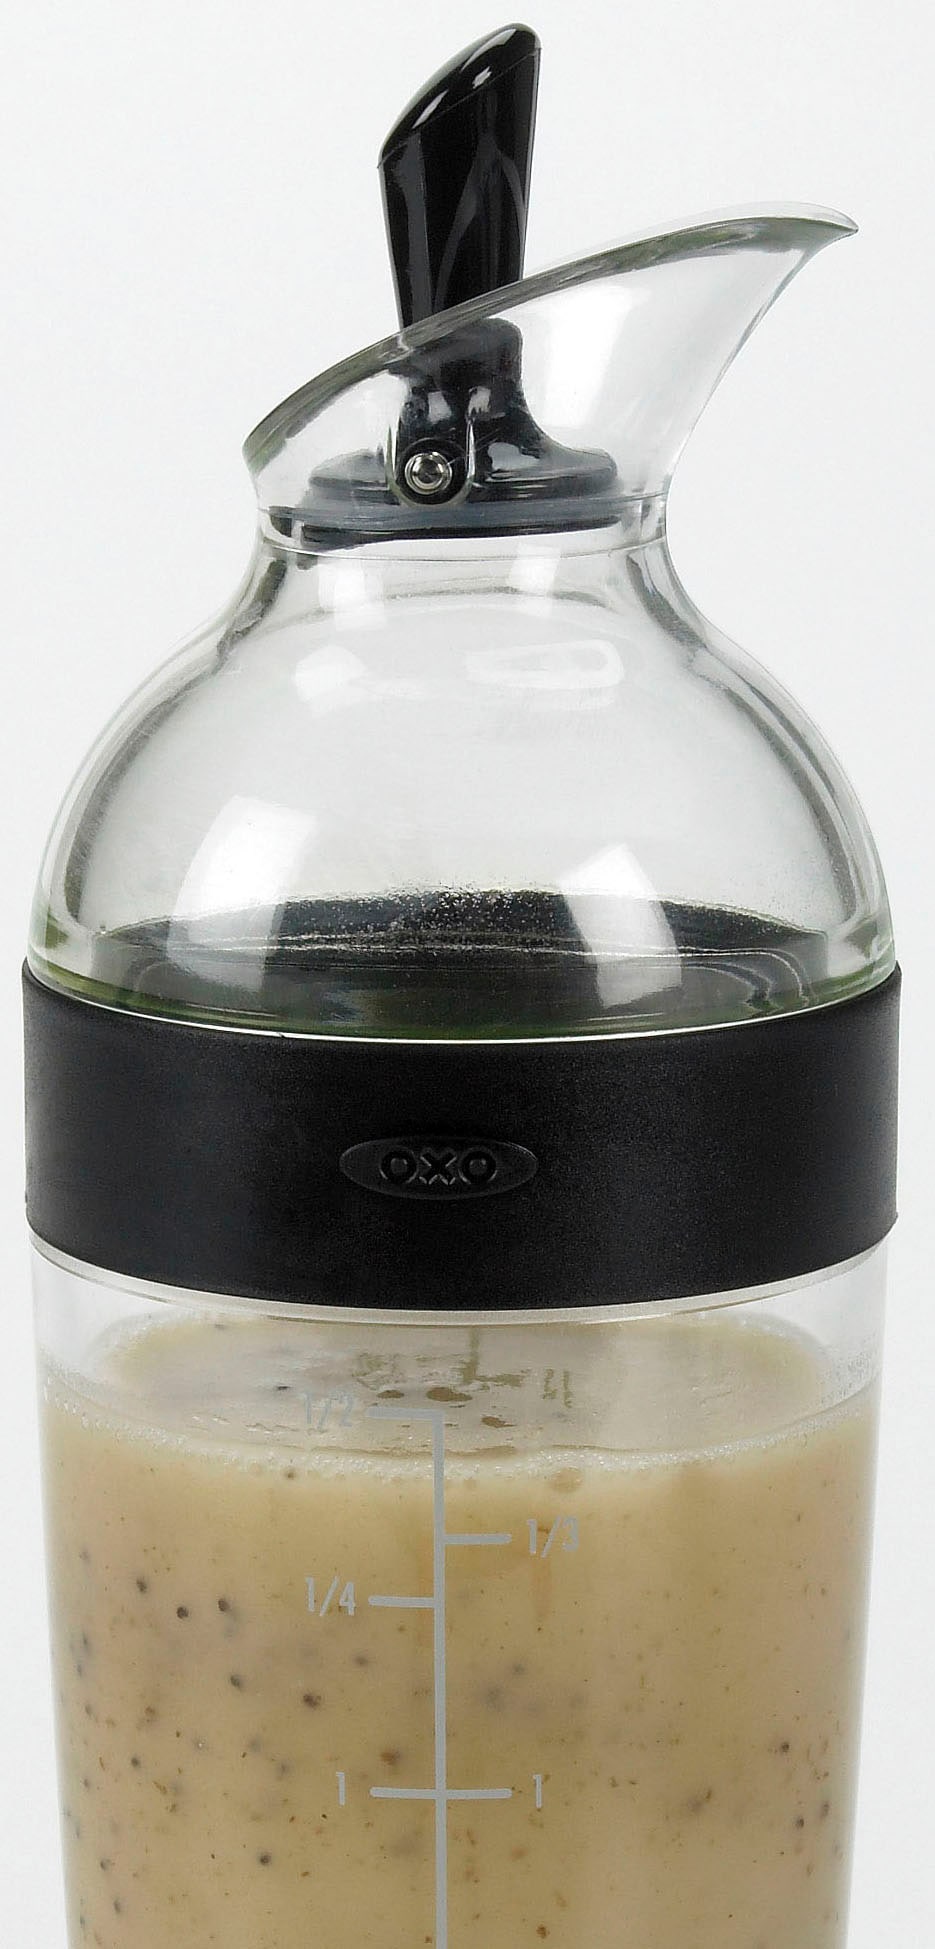 Good kaufen Dressing Grips 350 OXO für Salatdressing, Shaker, bequem ml